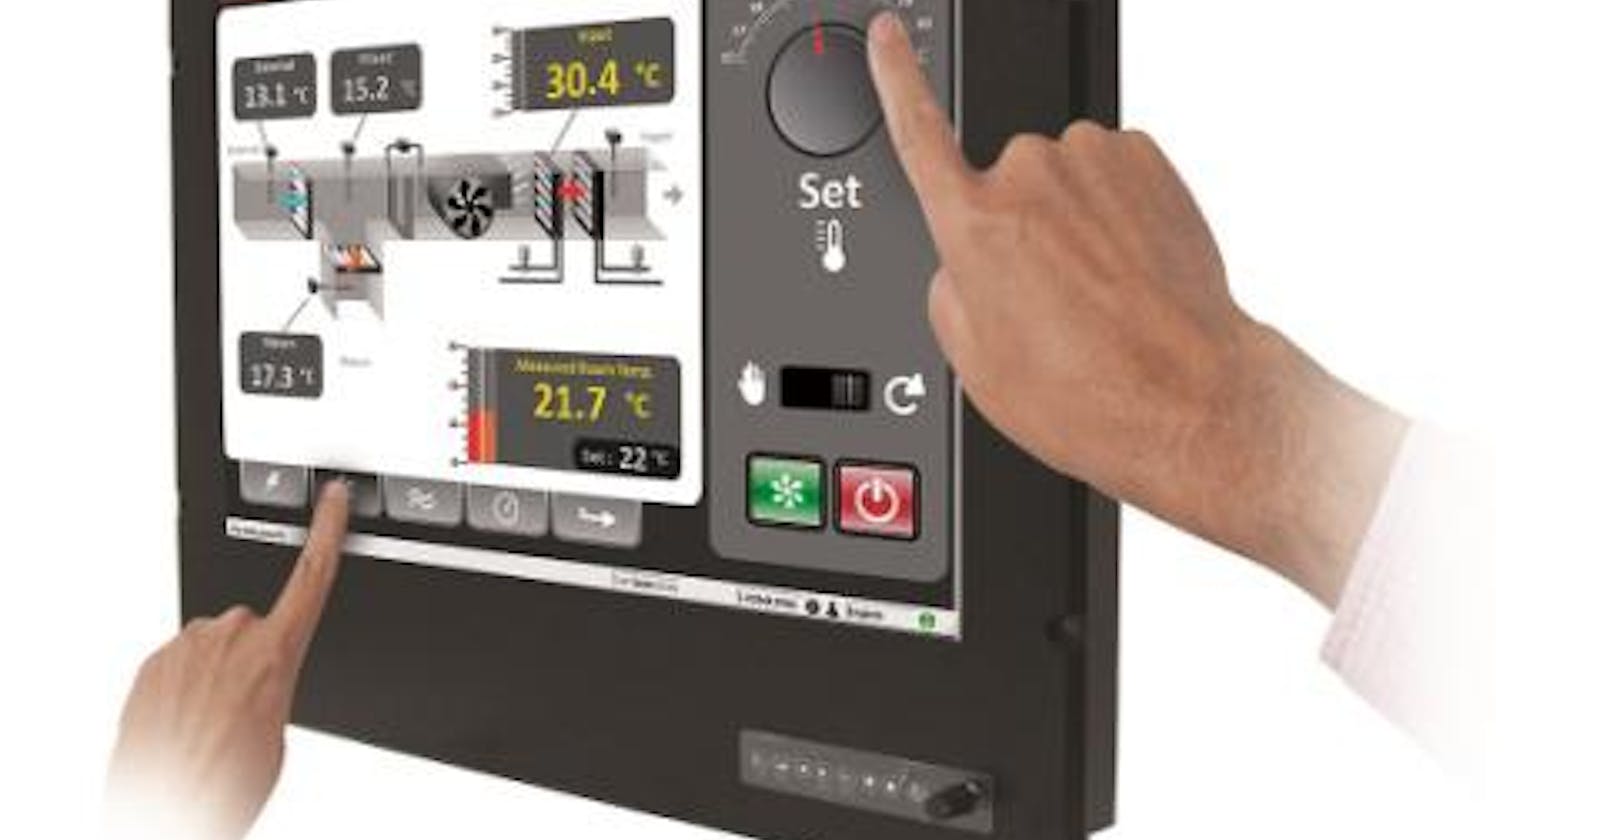 Touch Screen Monitor Repair in Dubai: A Step-by-Step Guide